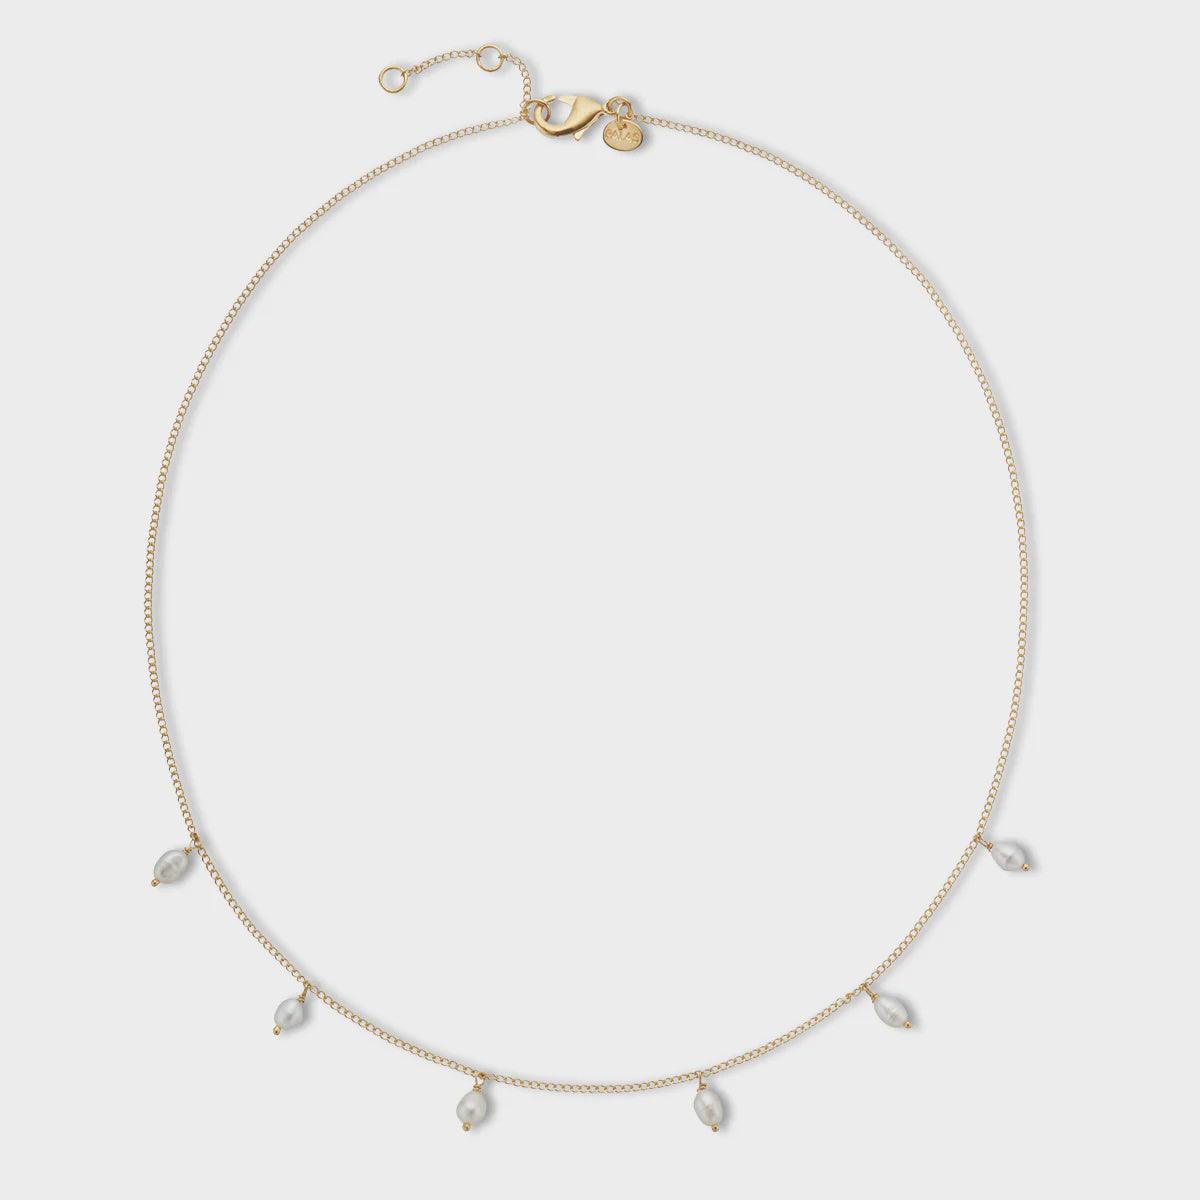 Positano Pearl & Chain Necklace - Handworks Nouveau Paperie